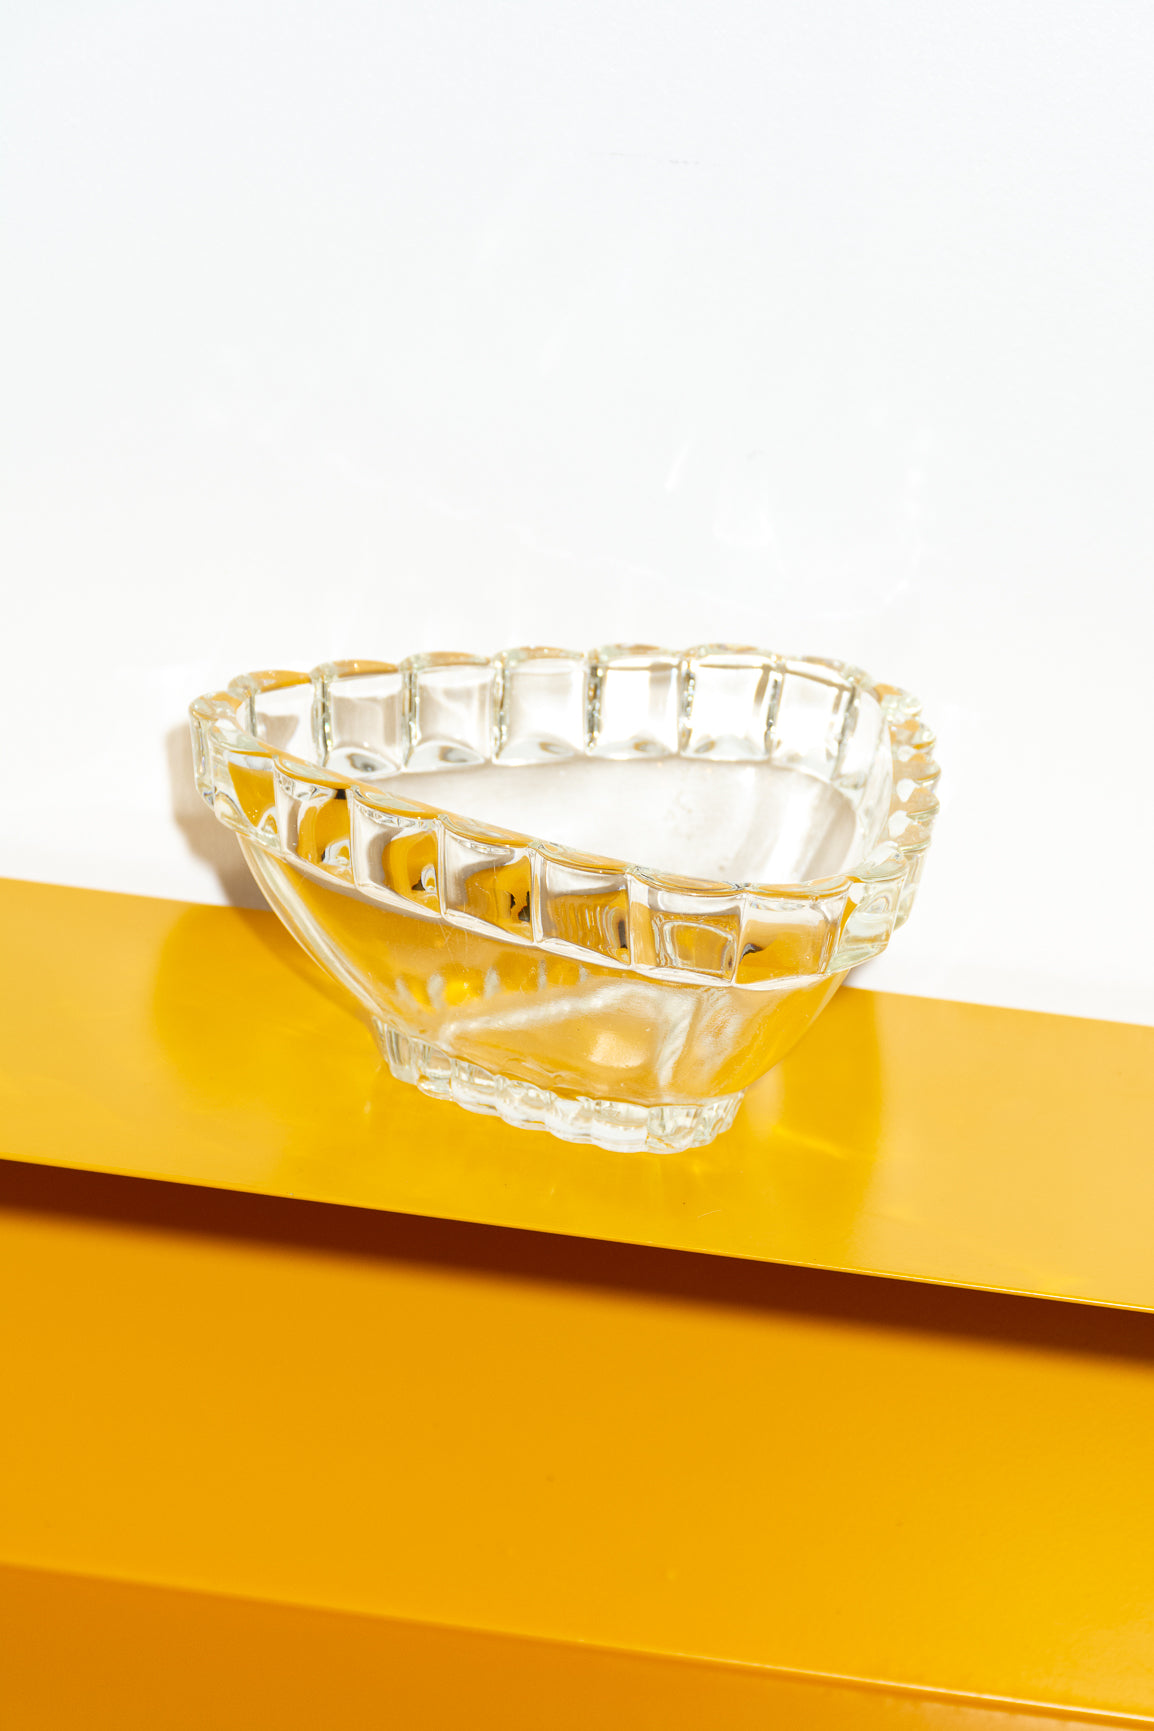 Triangular glass bowl with scalloping rim detail